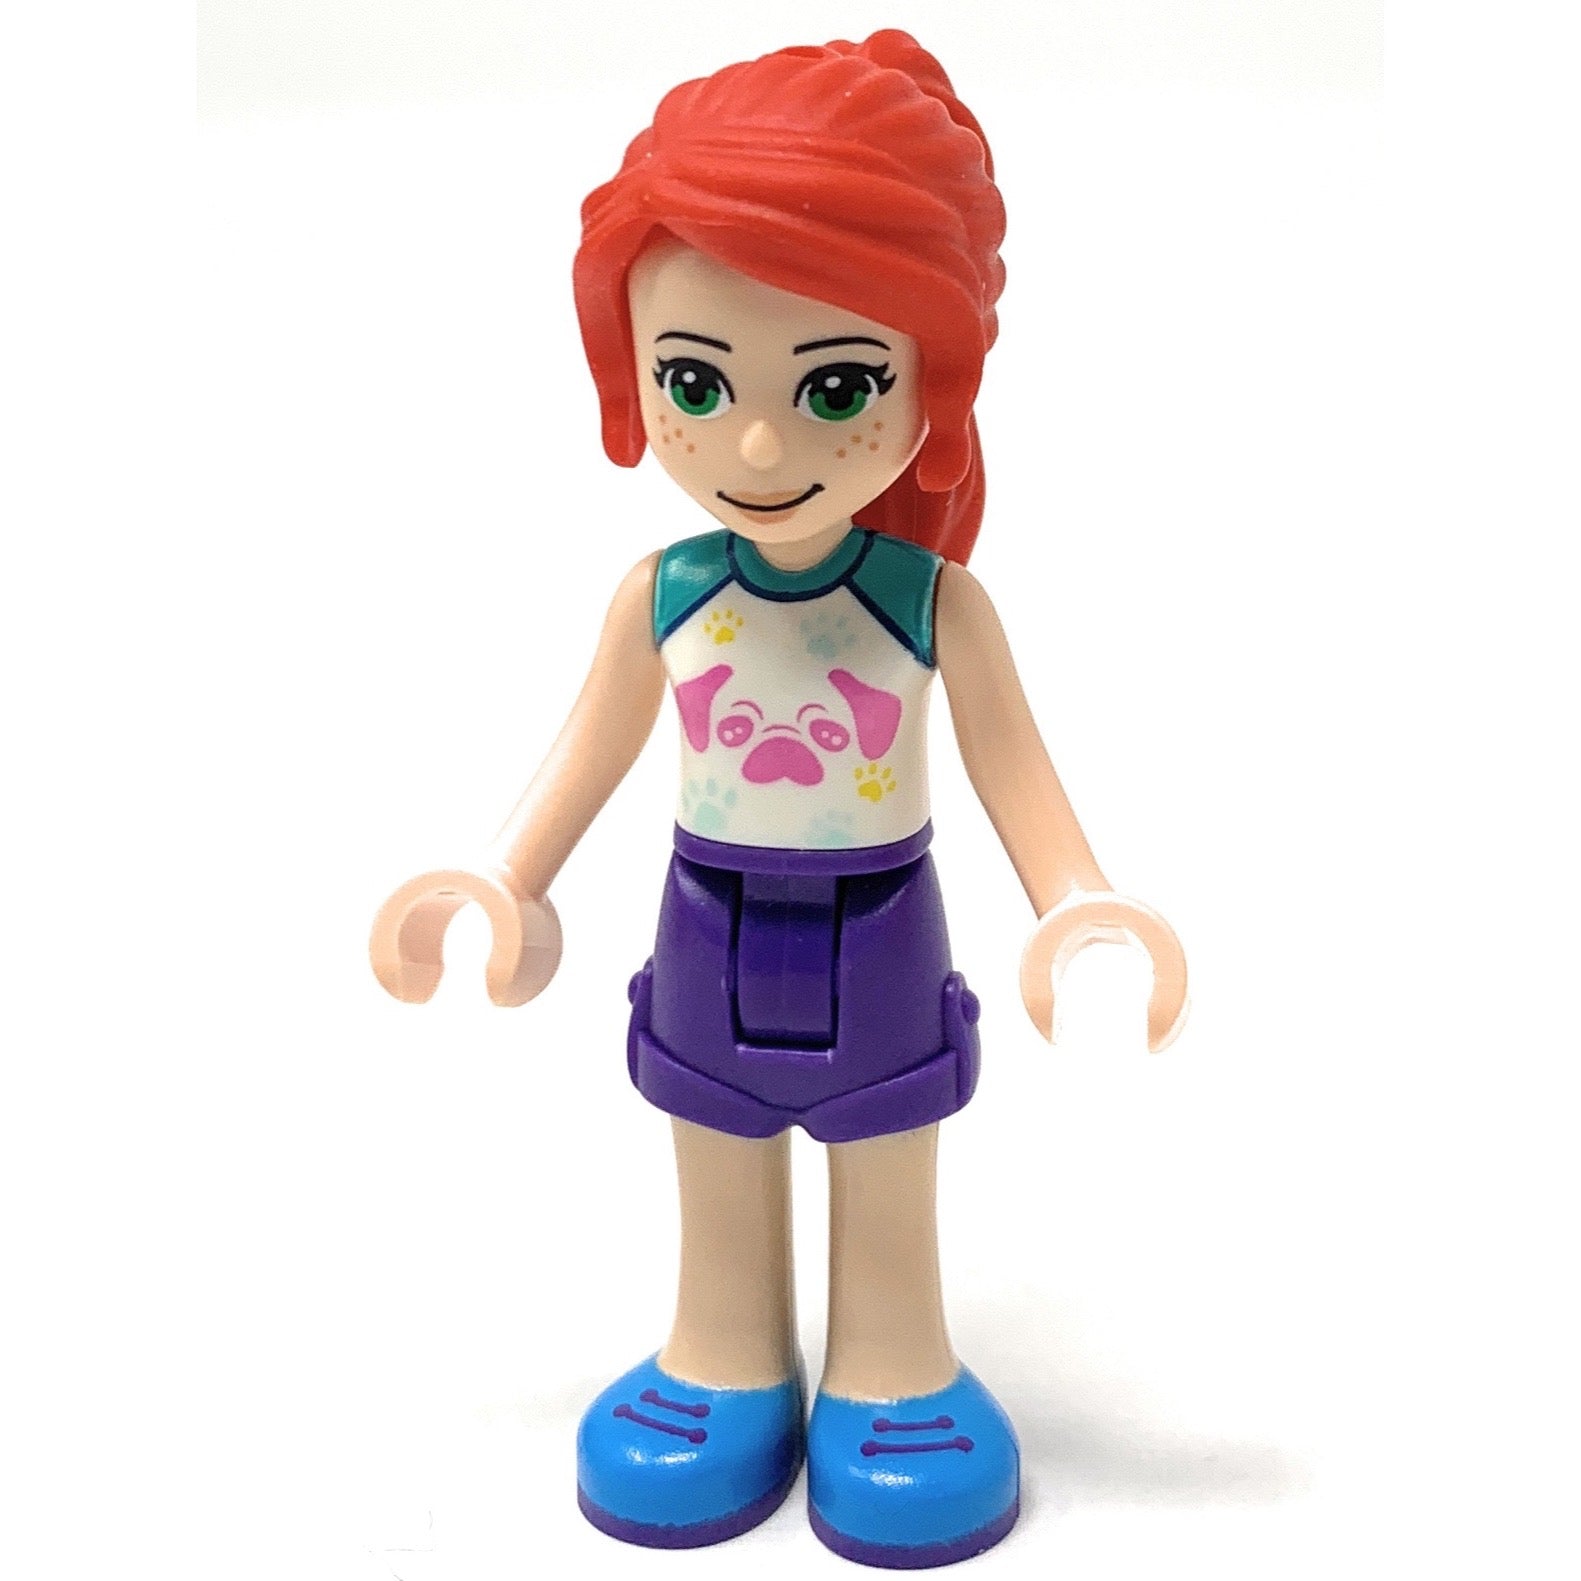 Mia (Purple Shorts / White Top with Dog) - LEGO Friends Minifigure (2021)